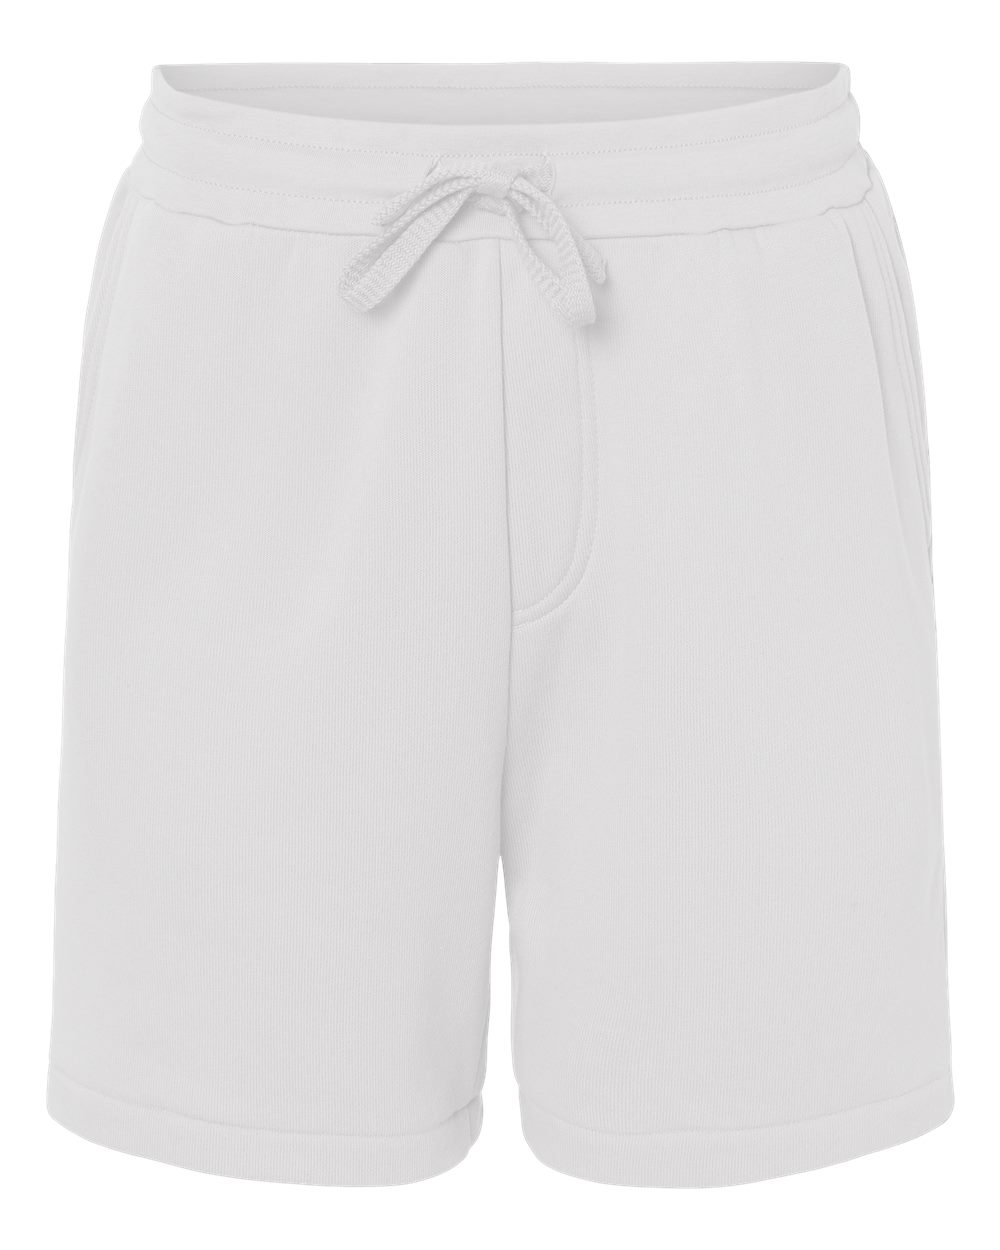 mens shorts FWD Fashion Unisex Sweatshorts